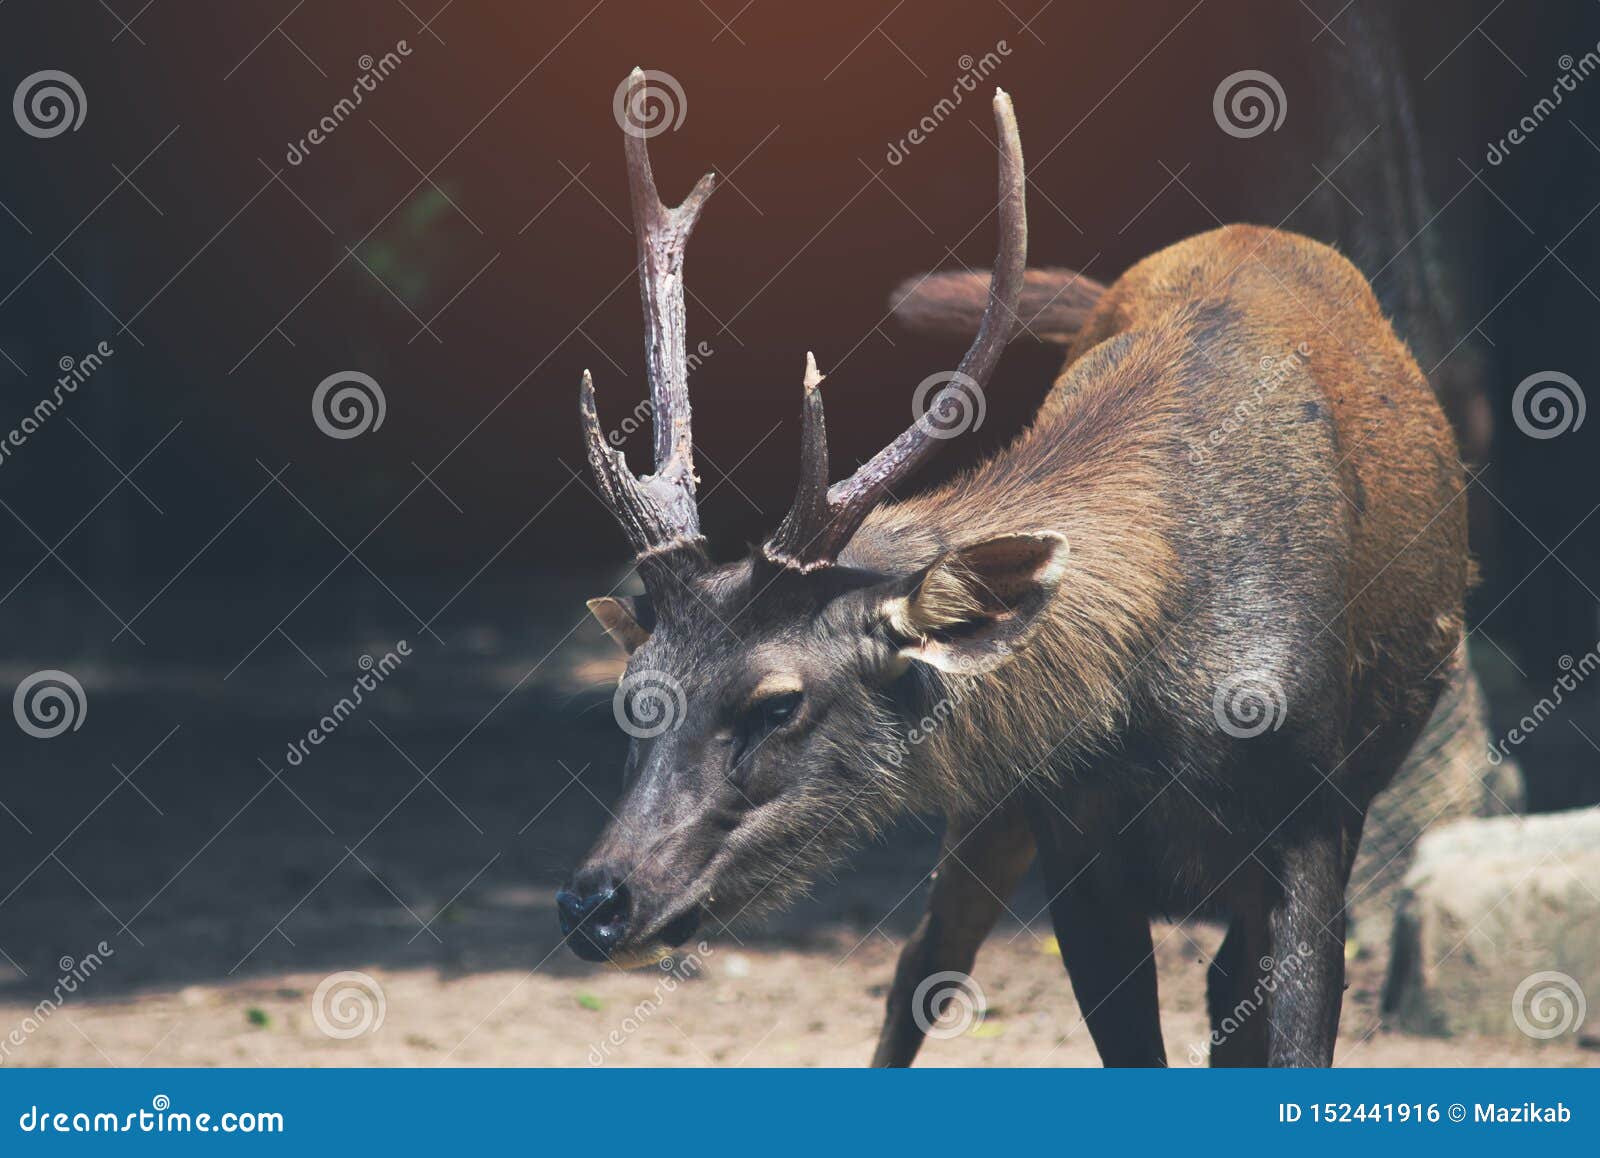 Sambar Deer is a Habit Rather Aggressive Stock Photo - Image of animal,  asia: 152441916